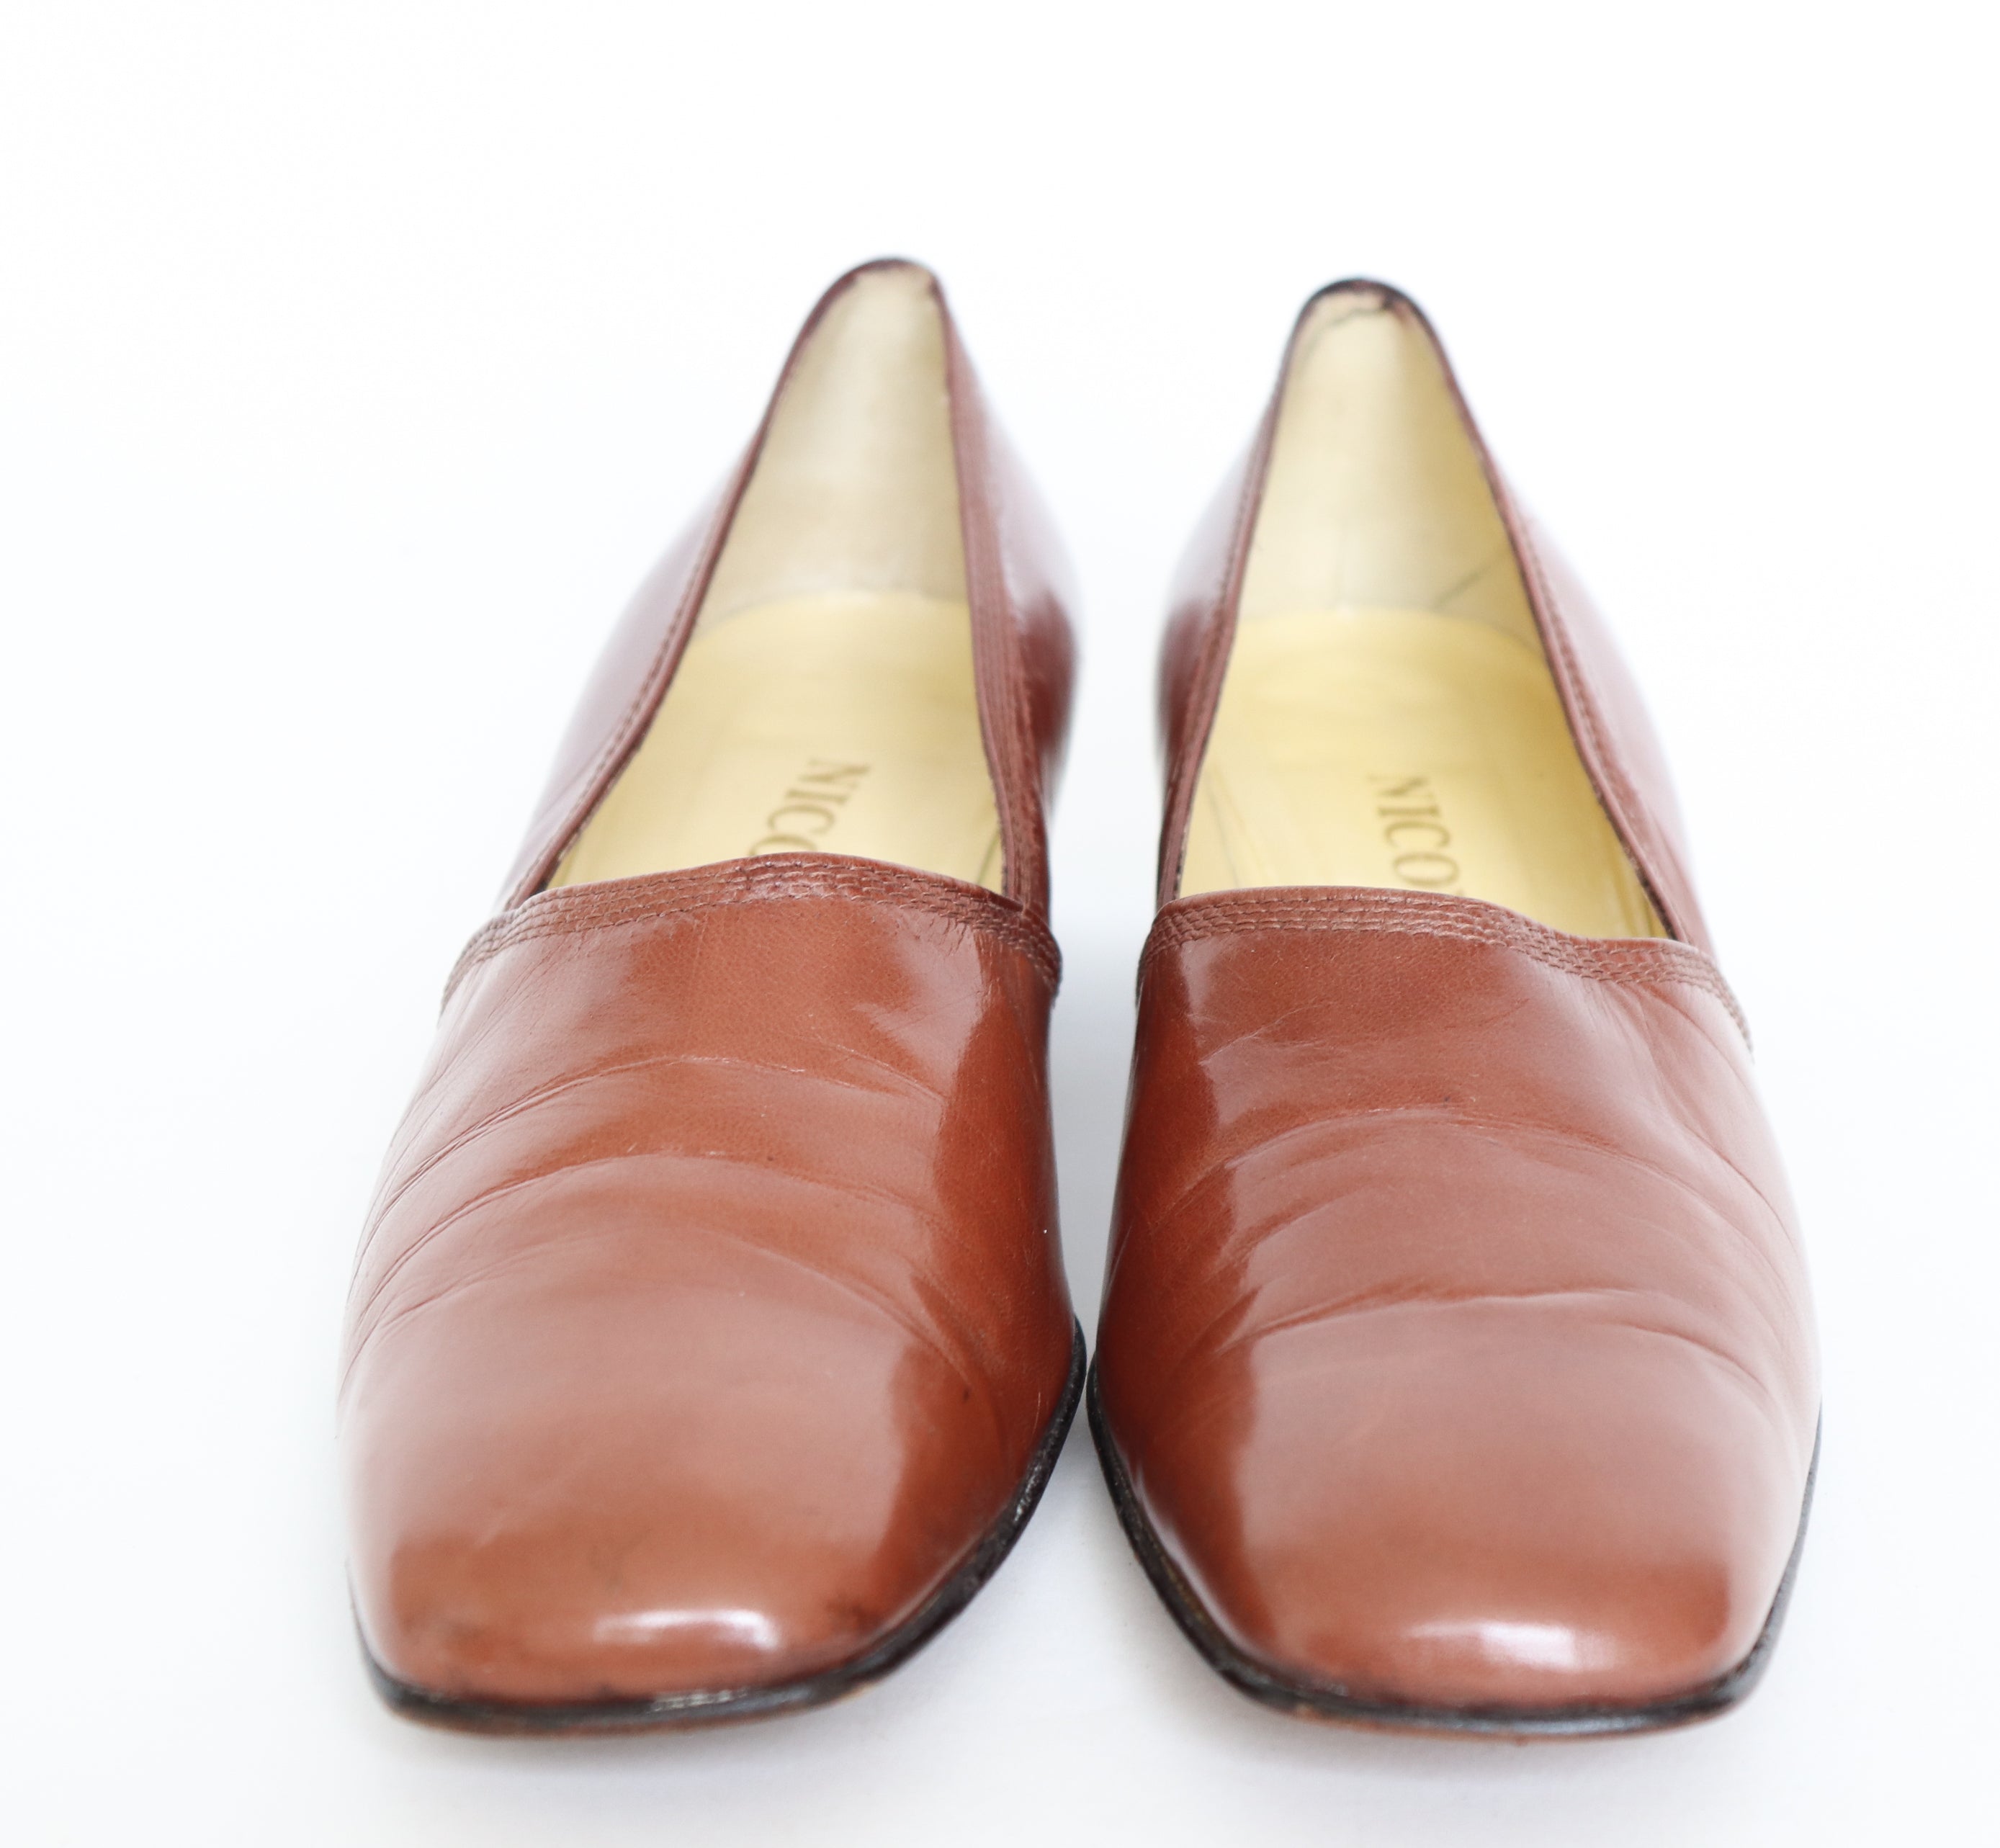 Vintage Mid Heel Loafers / Pumps - Brown Leather - NICOL - Fit Narrow 39 / UK 6